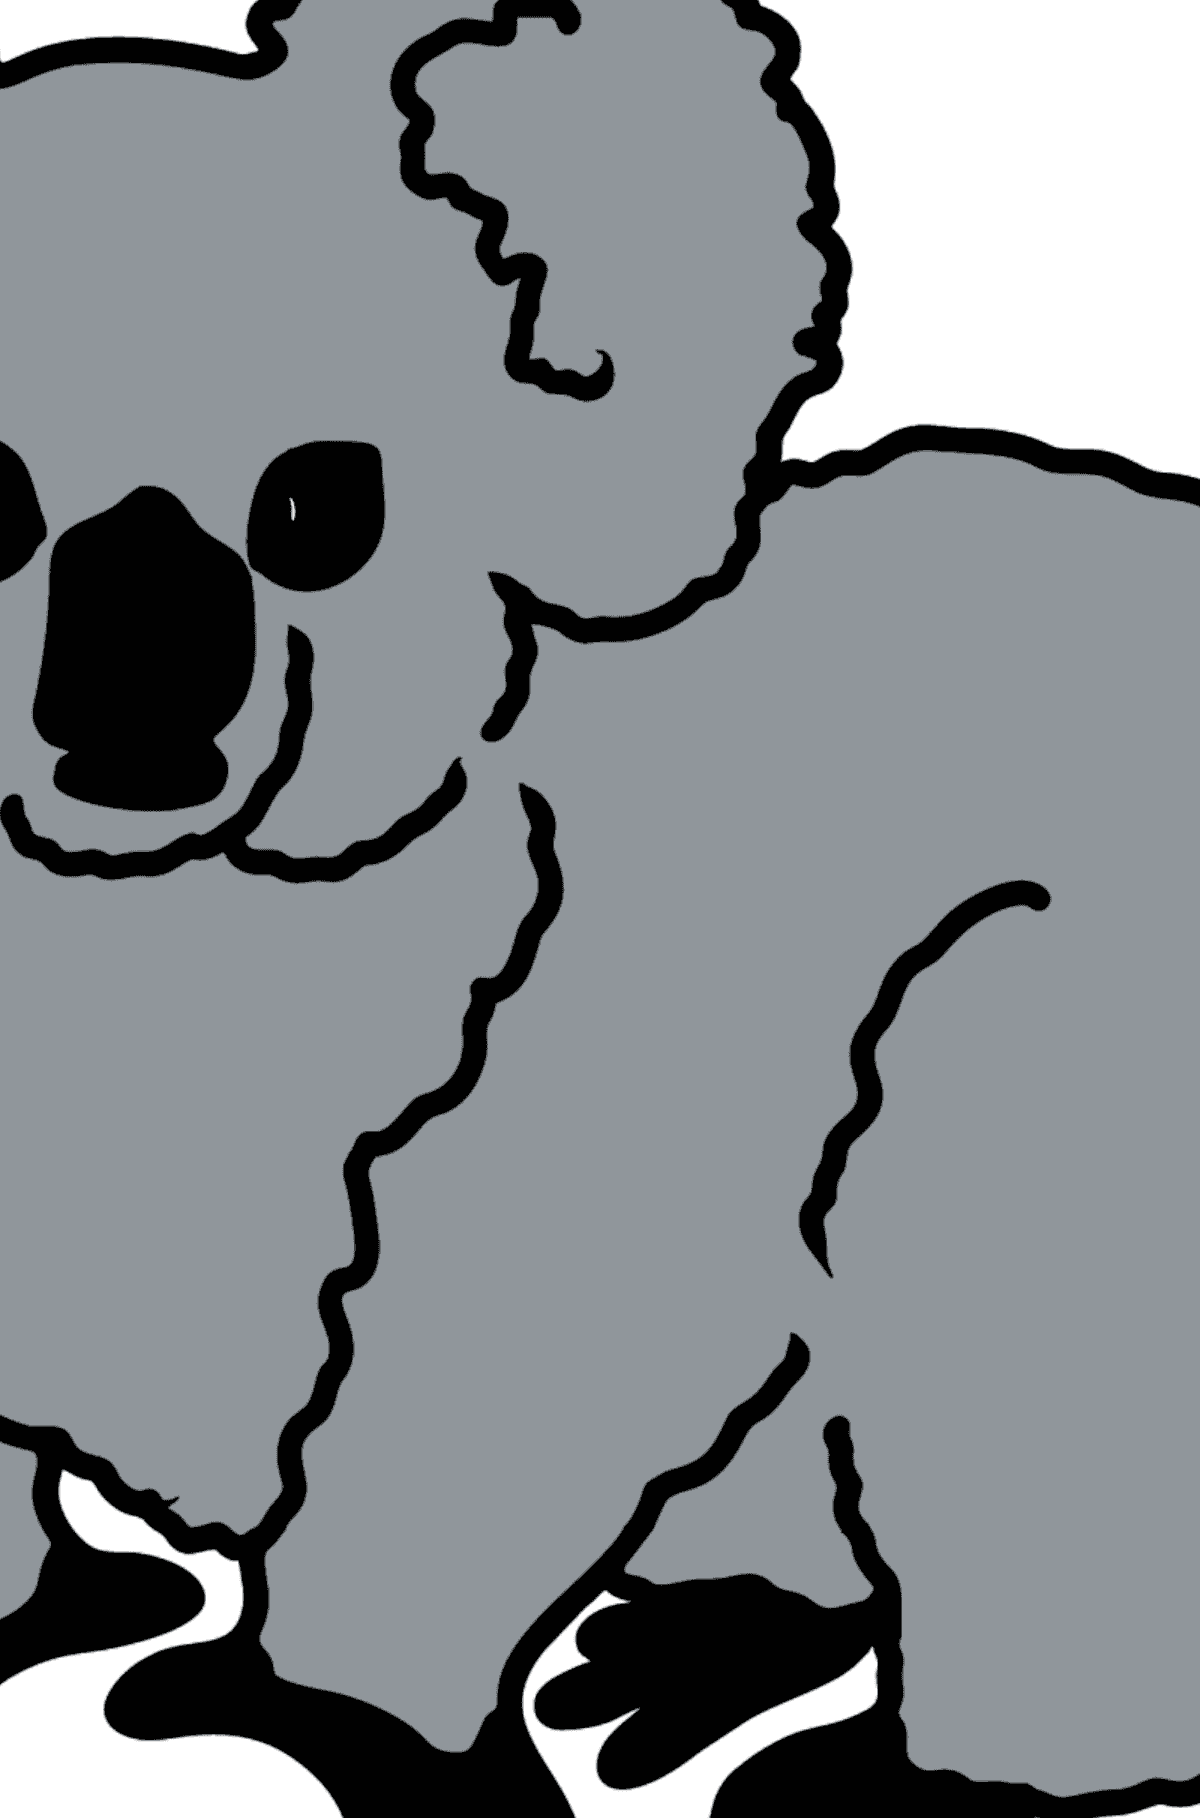 Koala Ausmalbild - Mathe Ausmalbilder - Division für Kinder